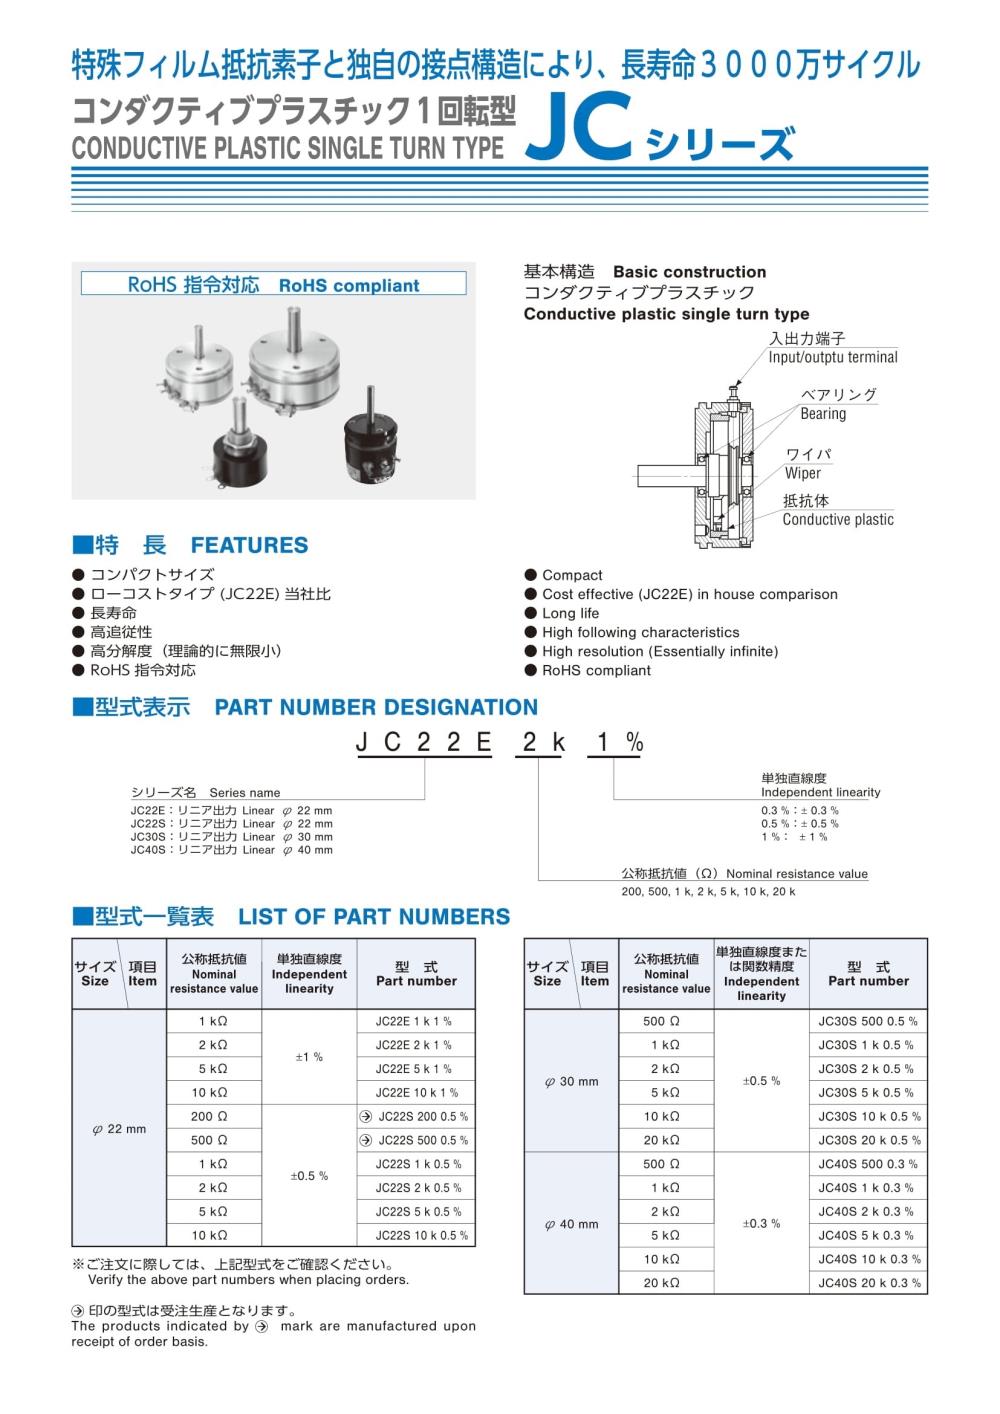 NIDEC Potentiometer JC30S Series,JC30S 500 0.5%, JC30S 1K 0.5%, JC30S 2K 0.5%, JC30S 5K 0.5%, JC30S 10K 0.5%, JC30S 20K 0.5%, NIDEC, Potentiometer,NIDEC,Instruments and Controls/Potentiometers